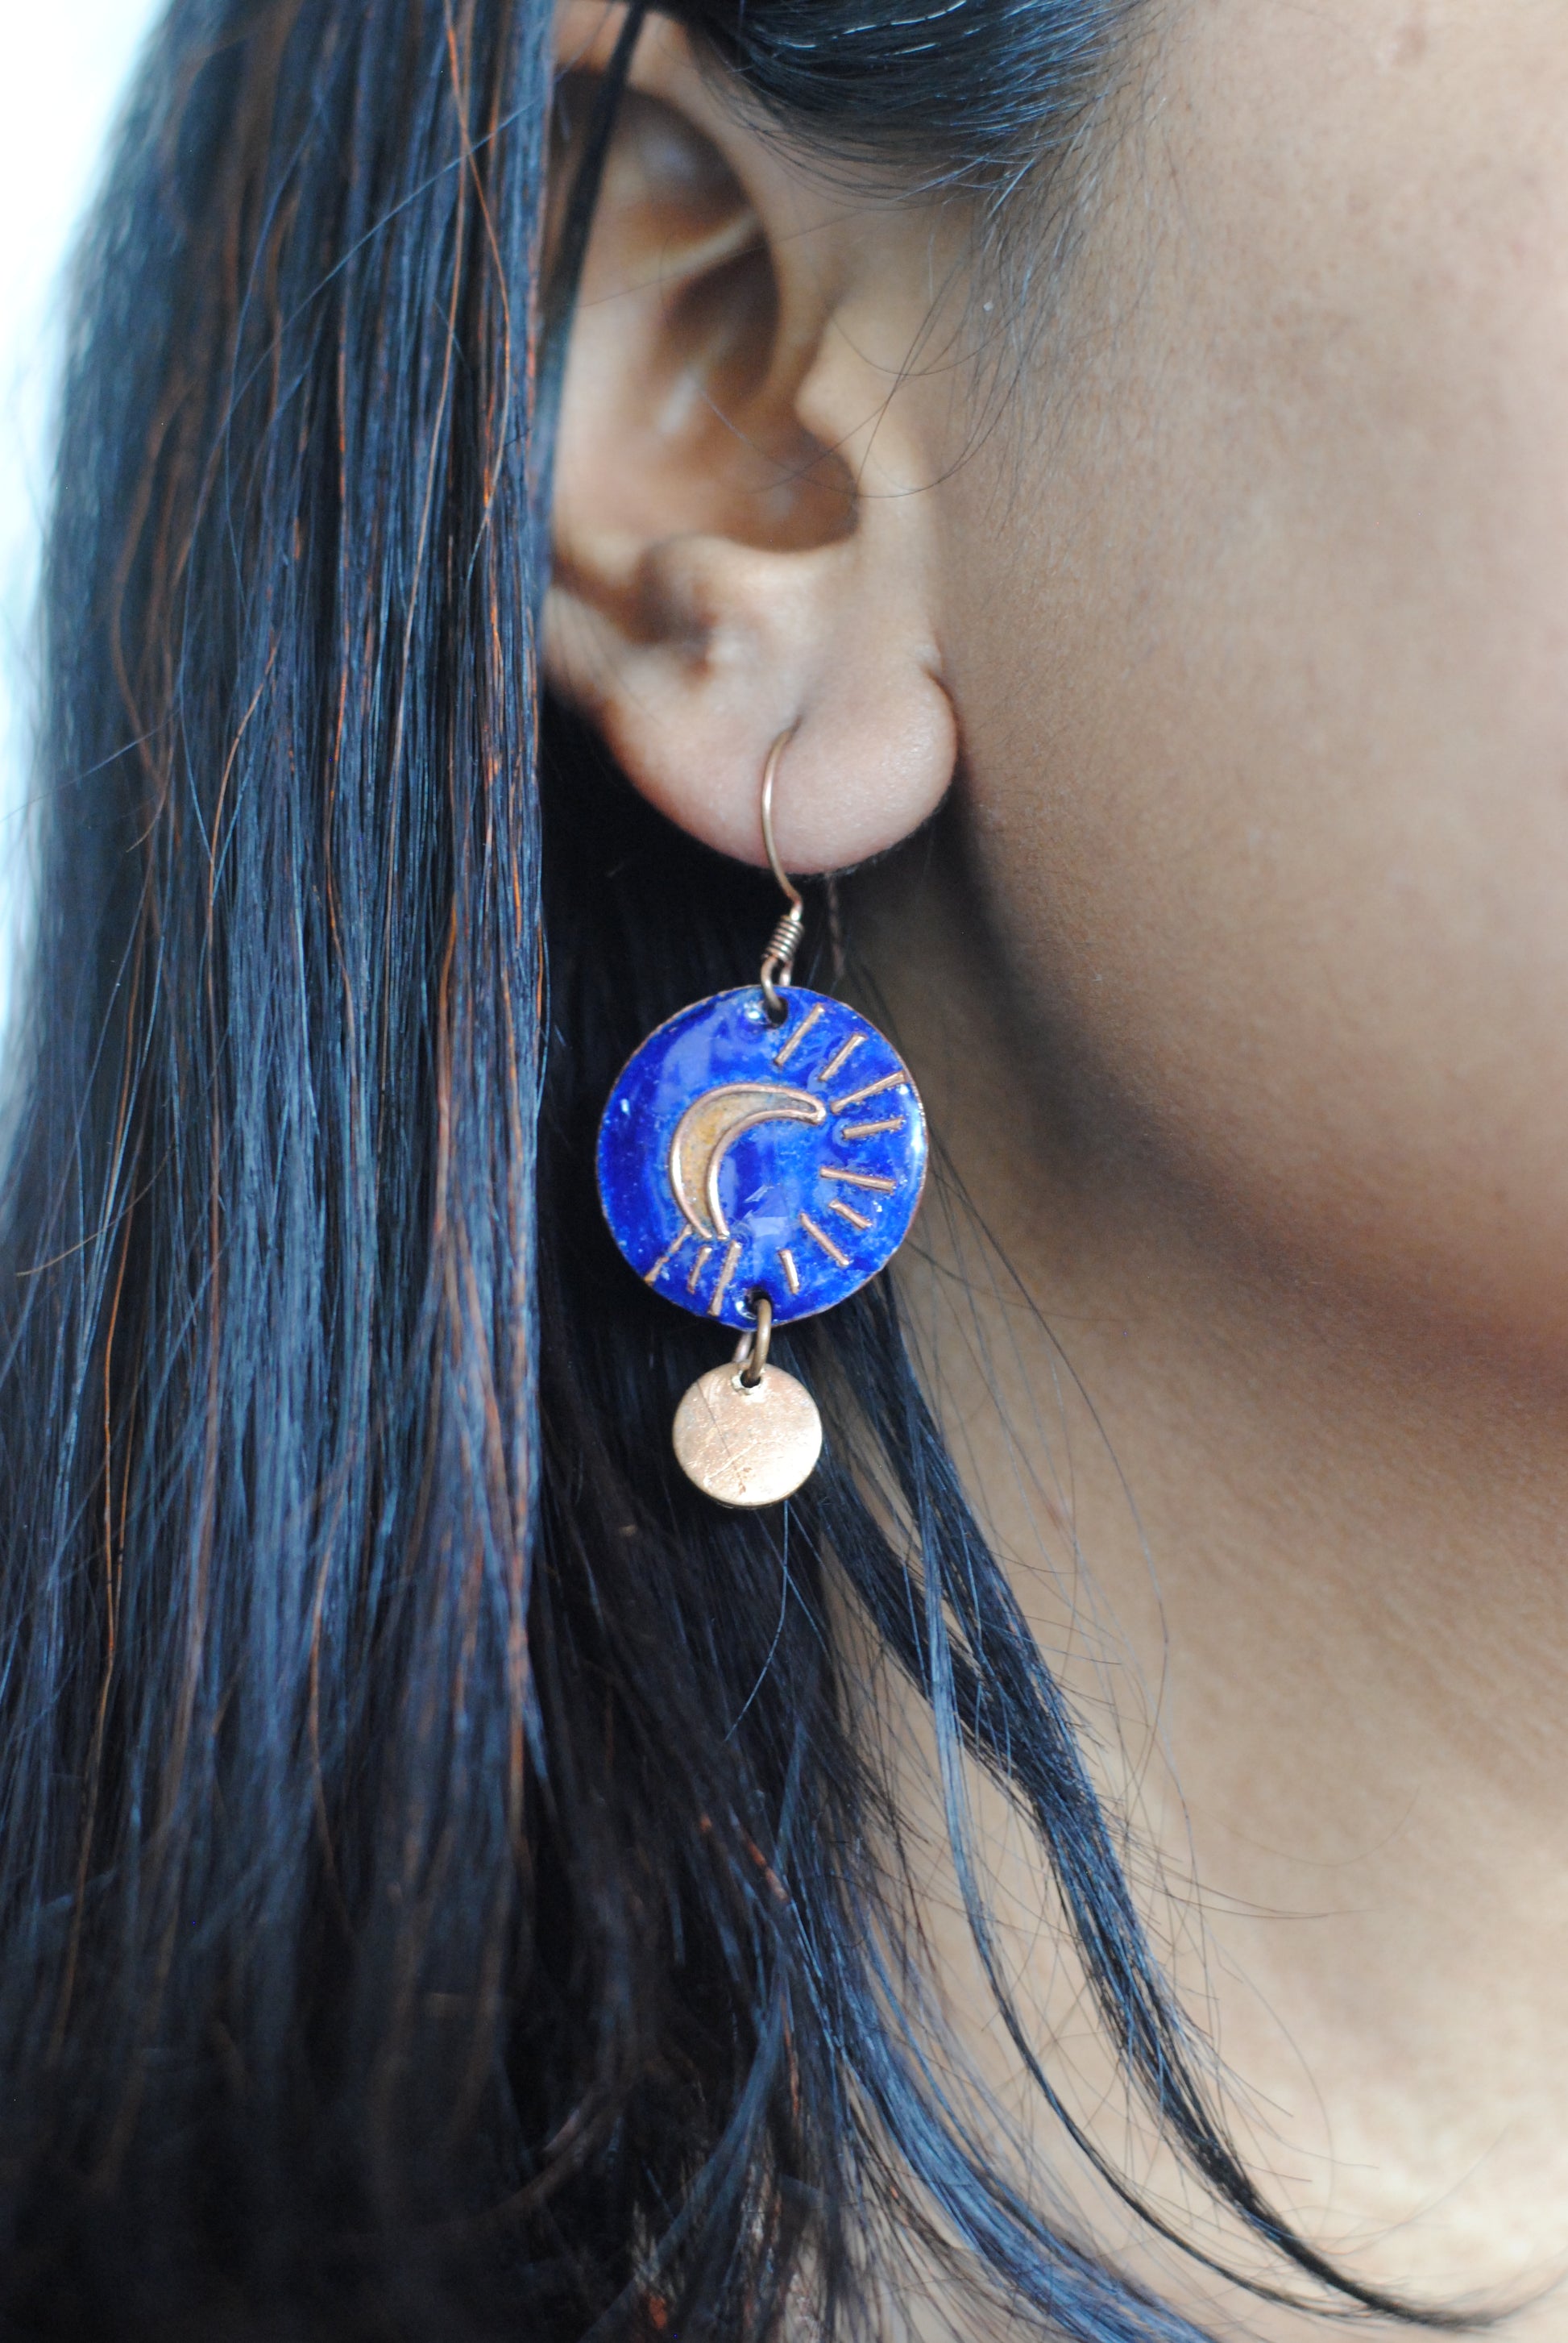 Copper enamel trinkets, funky earrings handcrafted in Maharashtra, India. Moon theme